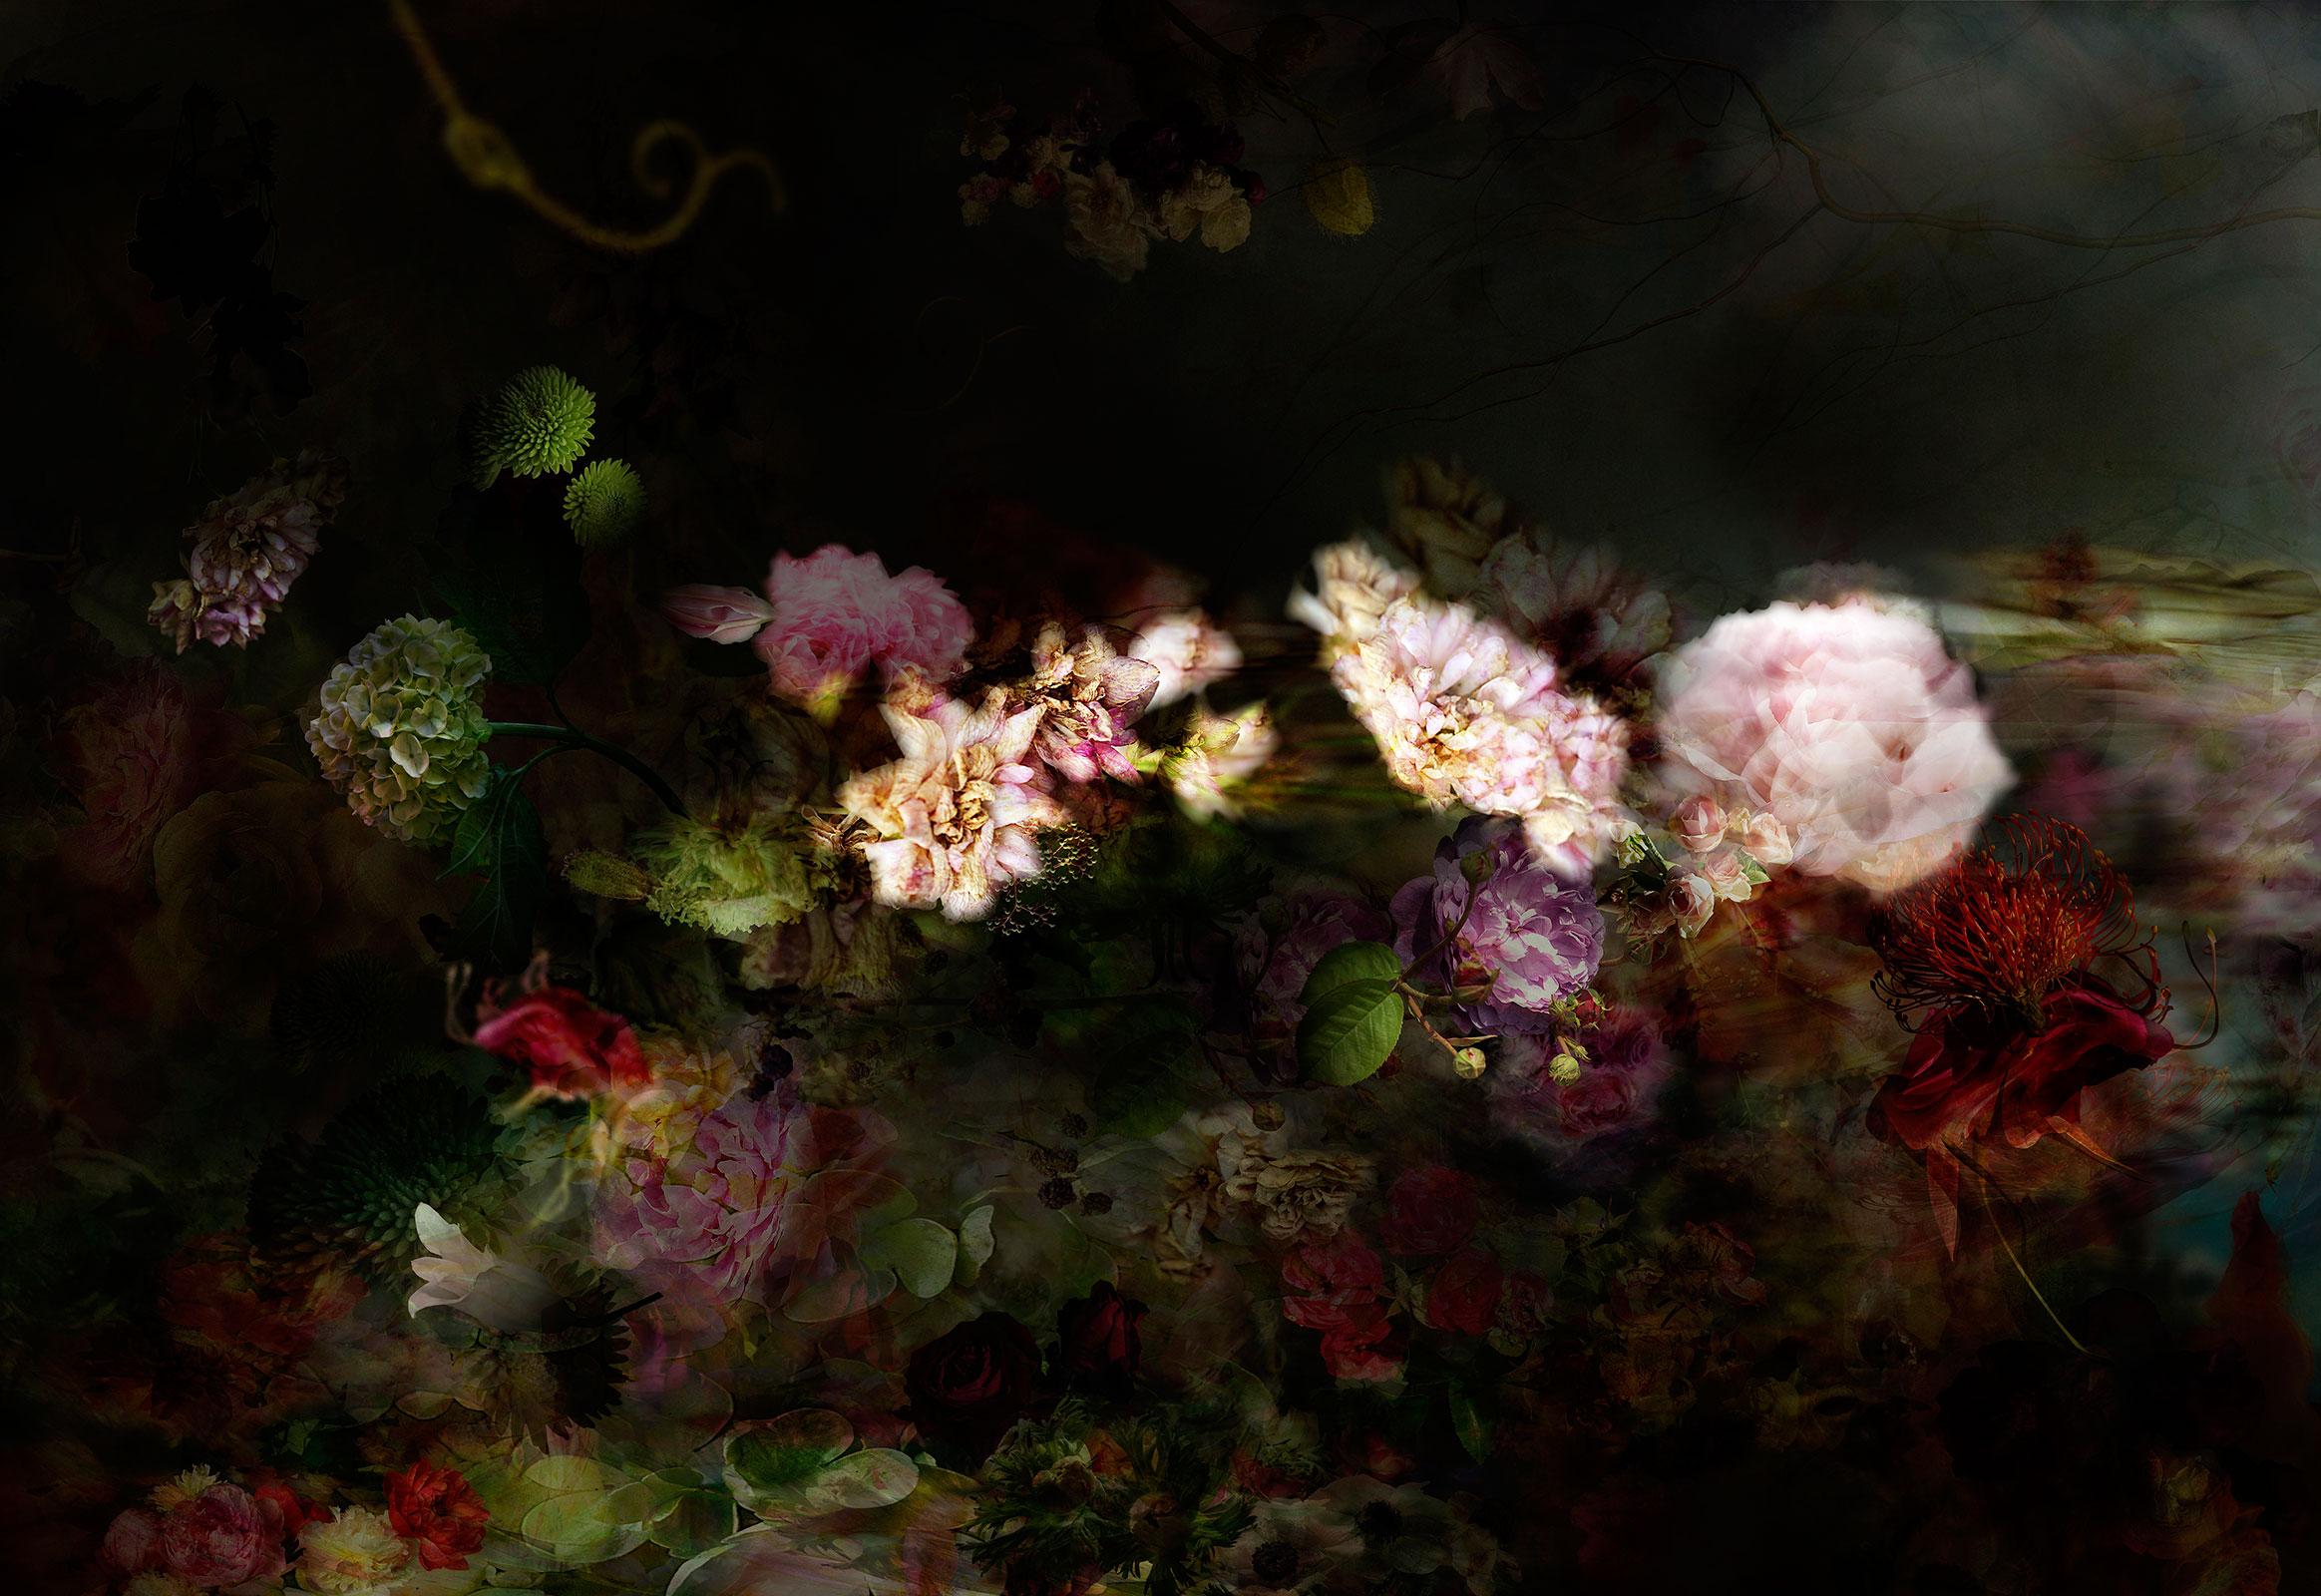 Isabelle Menin Still-Life Photograph - Solstice 4 - still life dark floral abstract landscape contemporary photograph